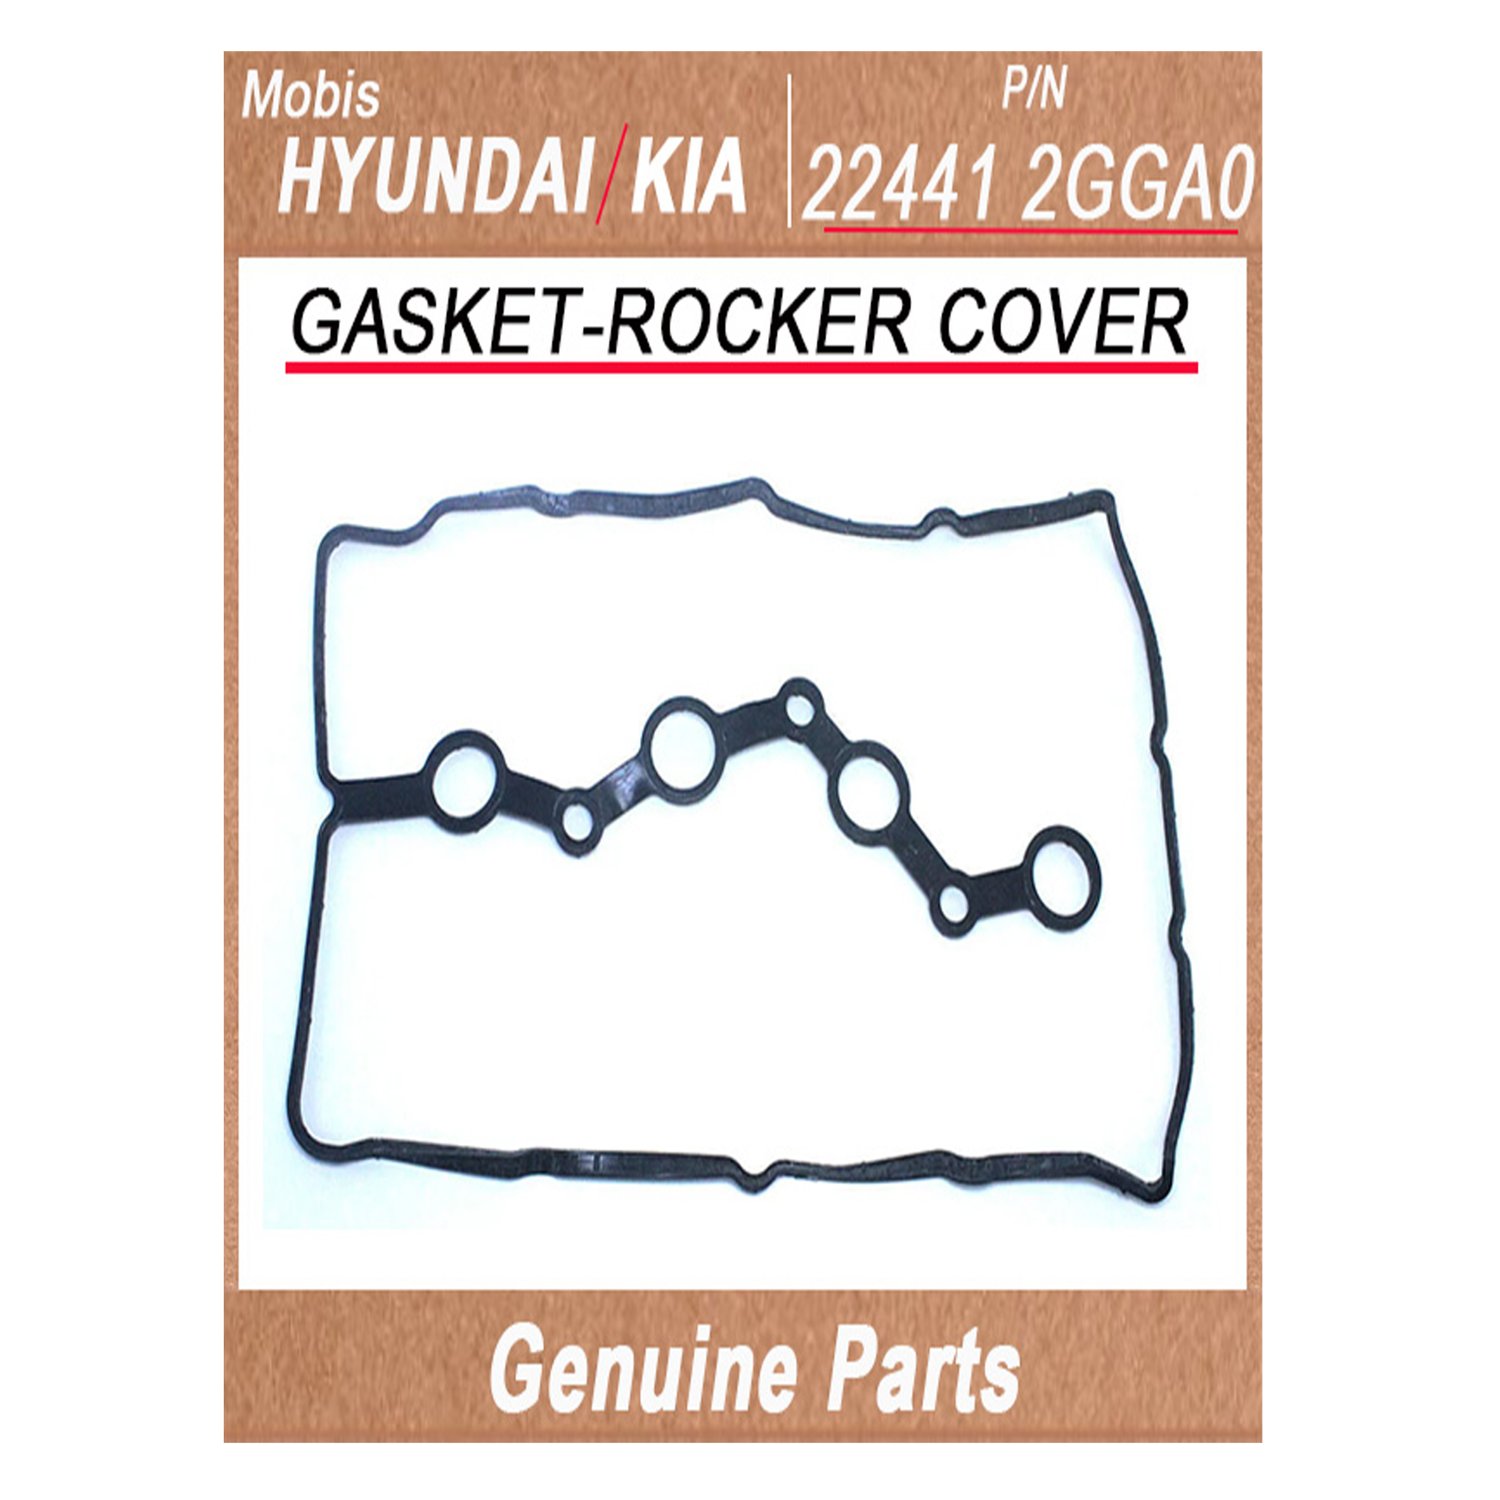 224412GGA0 _ GASKET_ROCKER COVER _ Genuine Korean Automotive Spare Parts _ Hyundai Kia _Mobis_